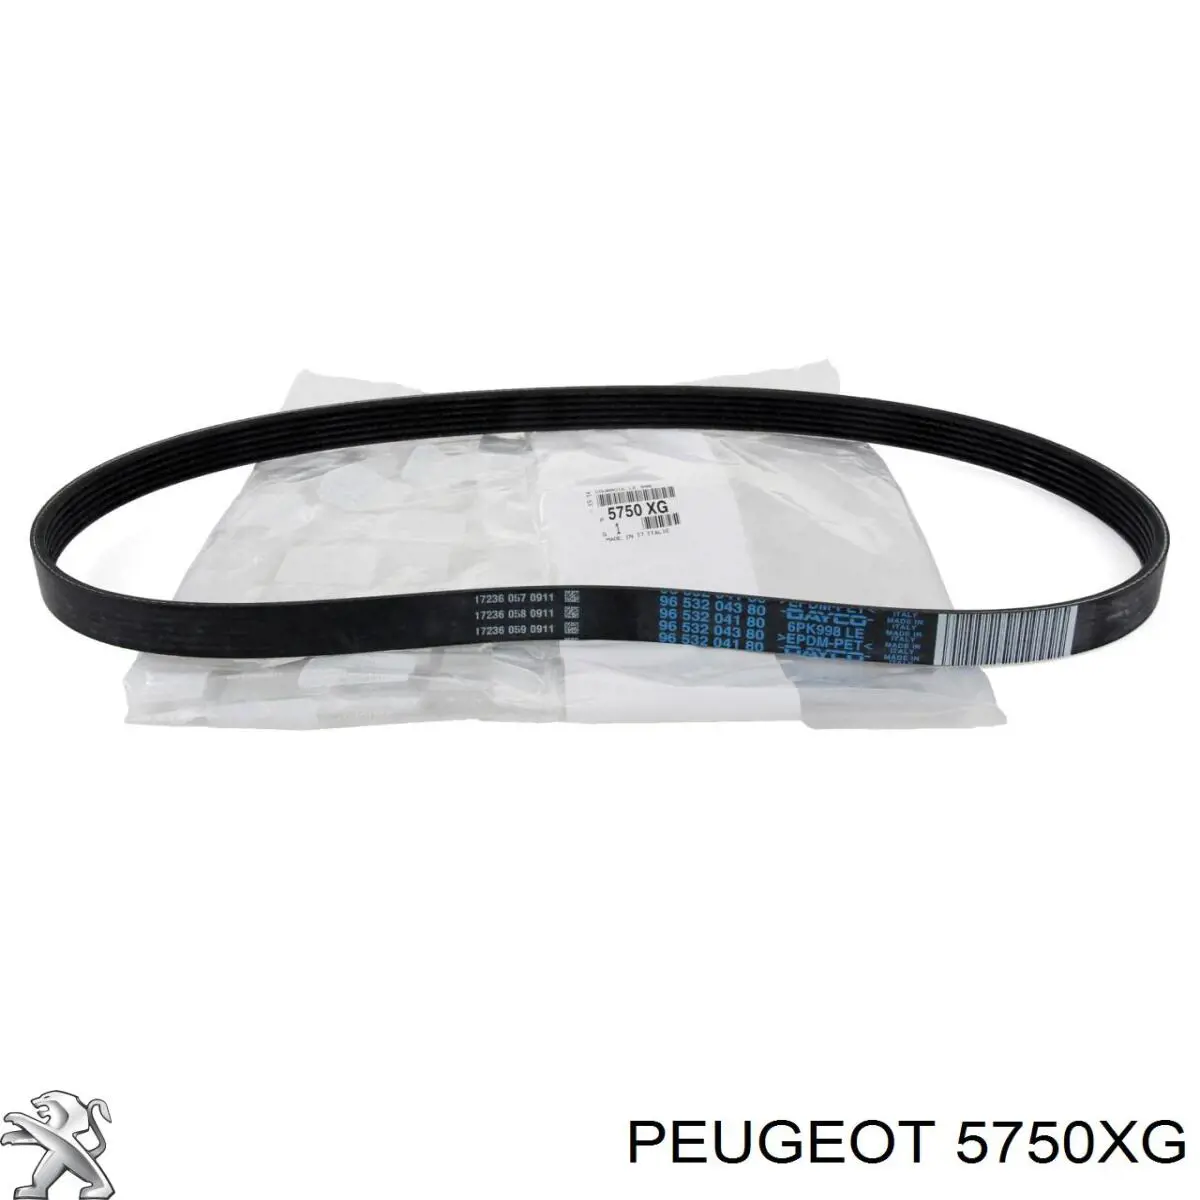 5750XG Peugeot/Citroen correa trapezoidal